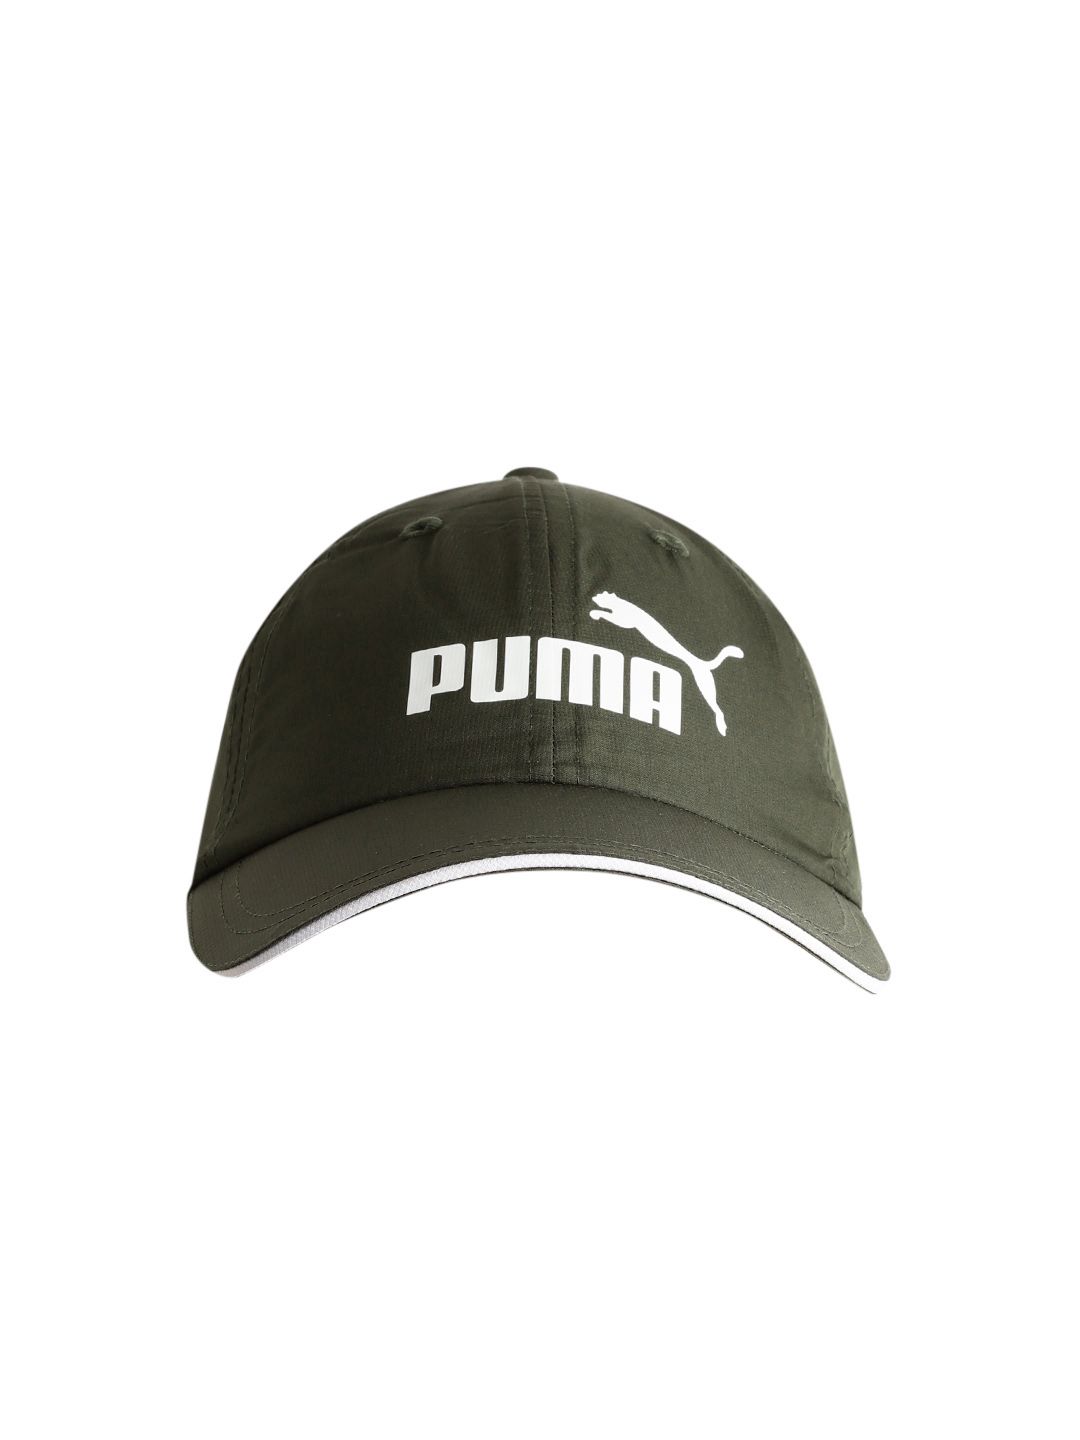 Puma Unisex Olive Green & White Printed Performance Visor Cap Price in India